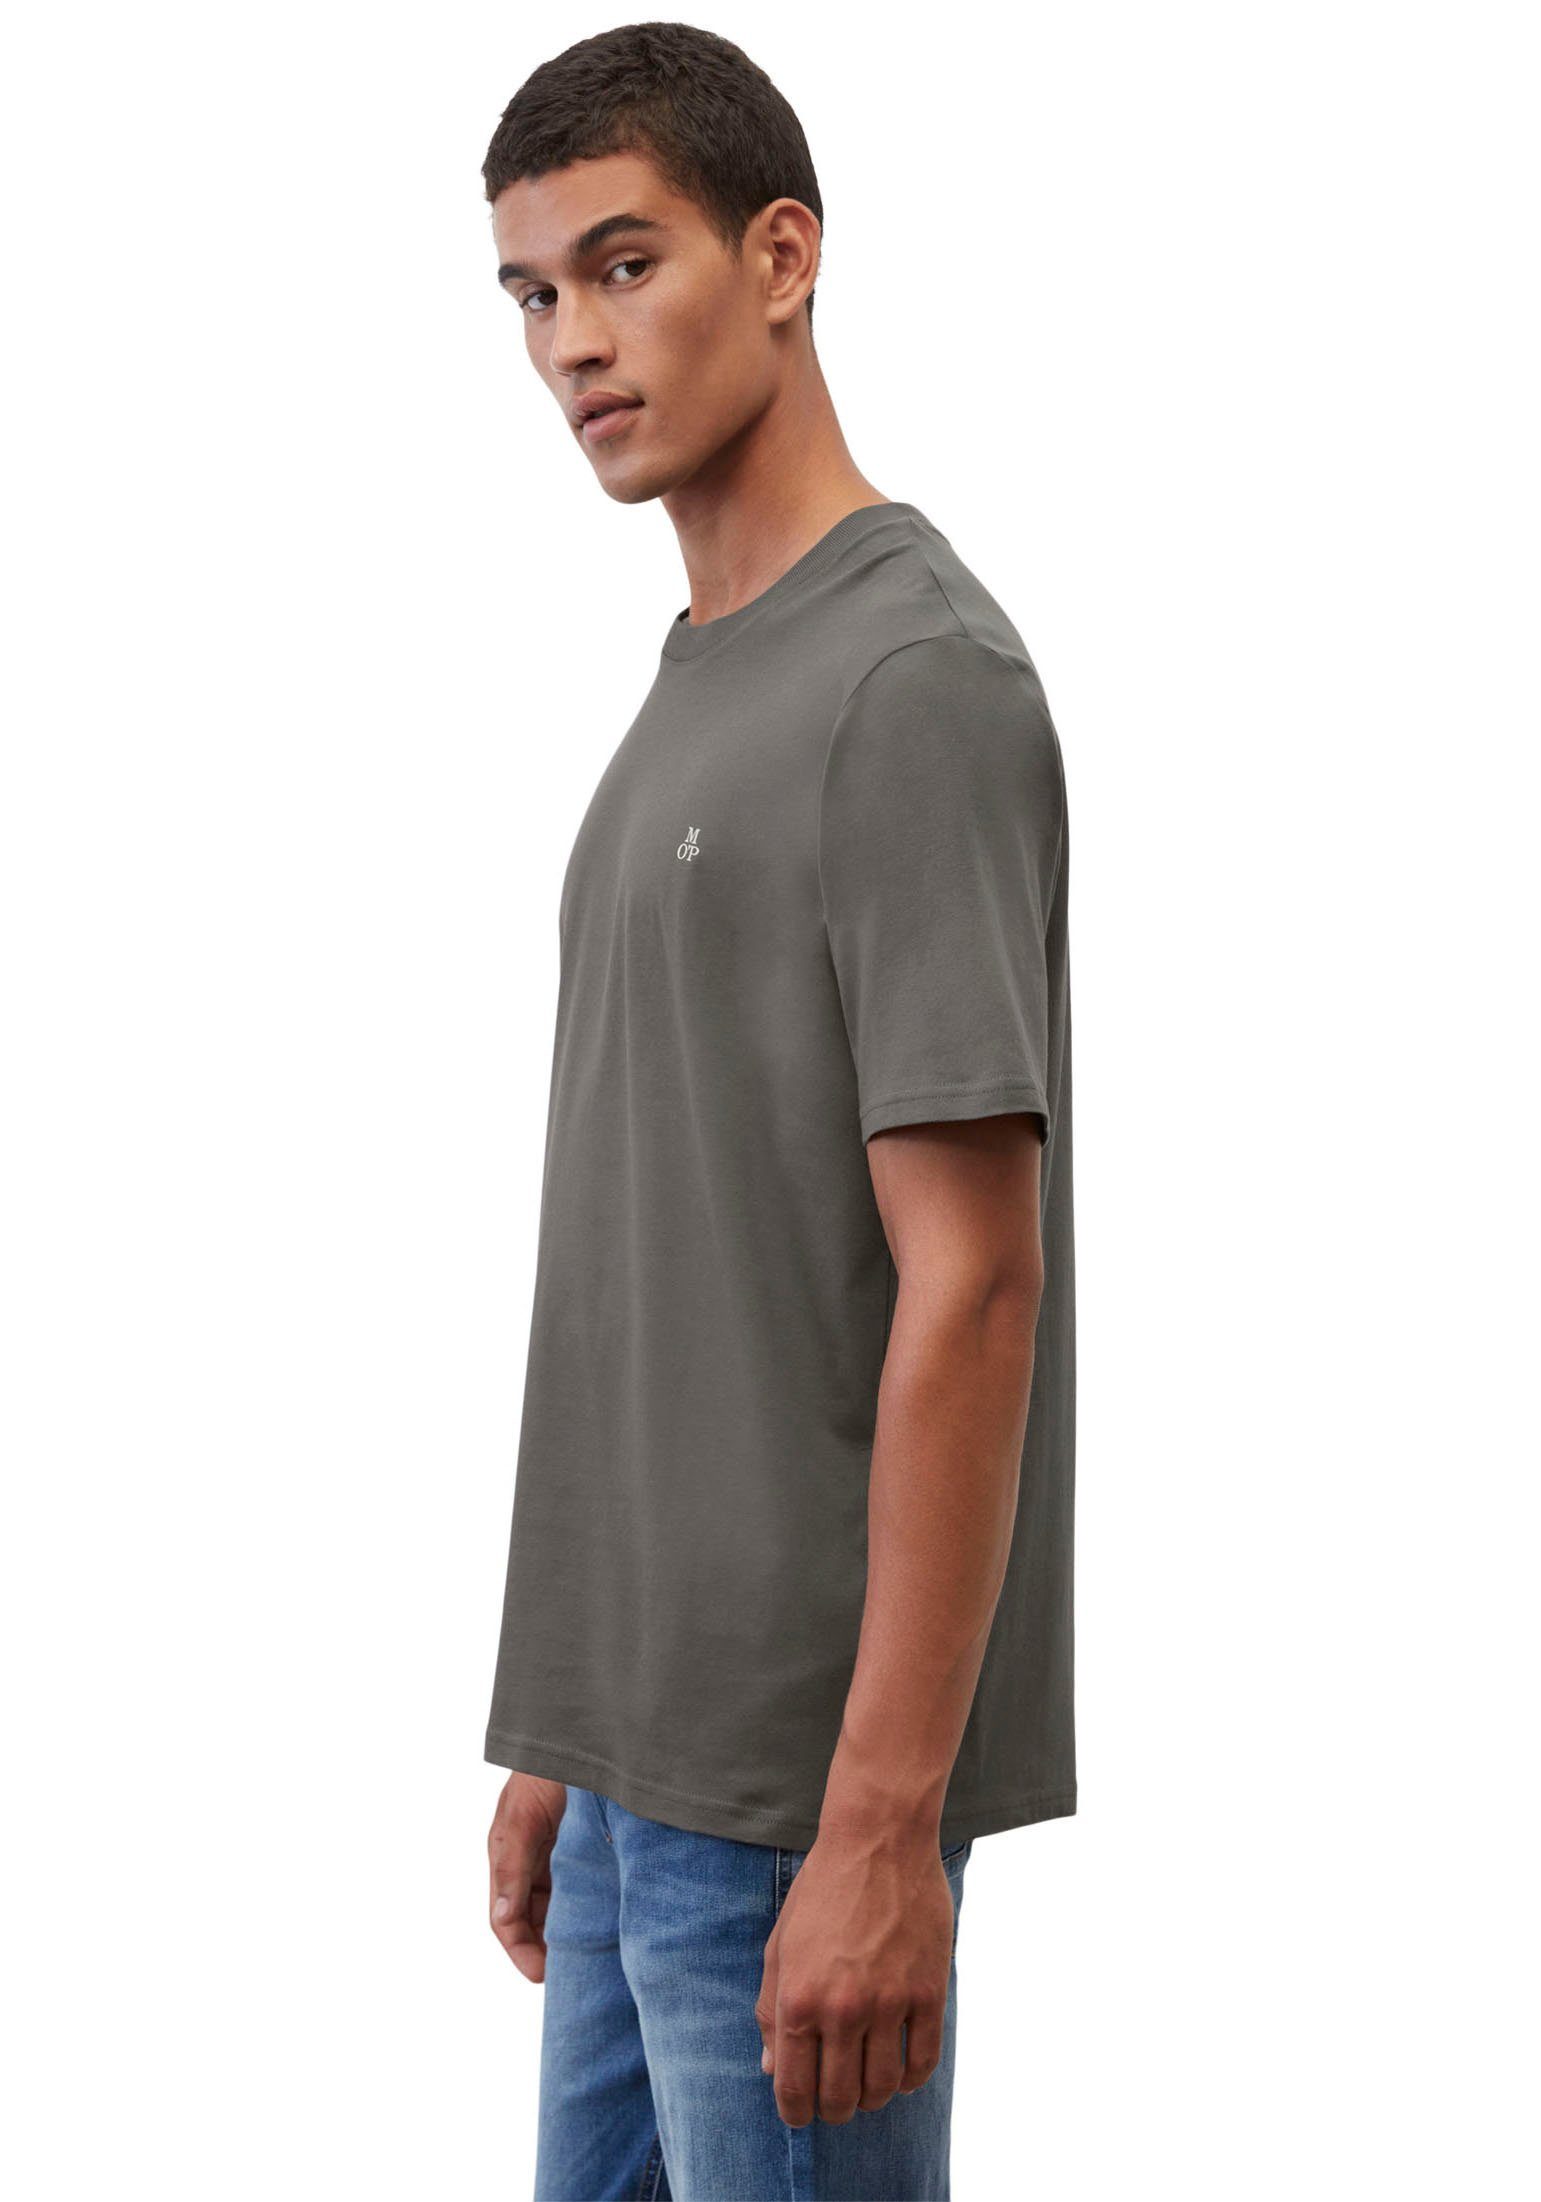 Marc O'Polo pinstripe Bio-Baumwolle Logo-T-Shirt T-Shirt aus gray